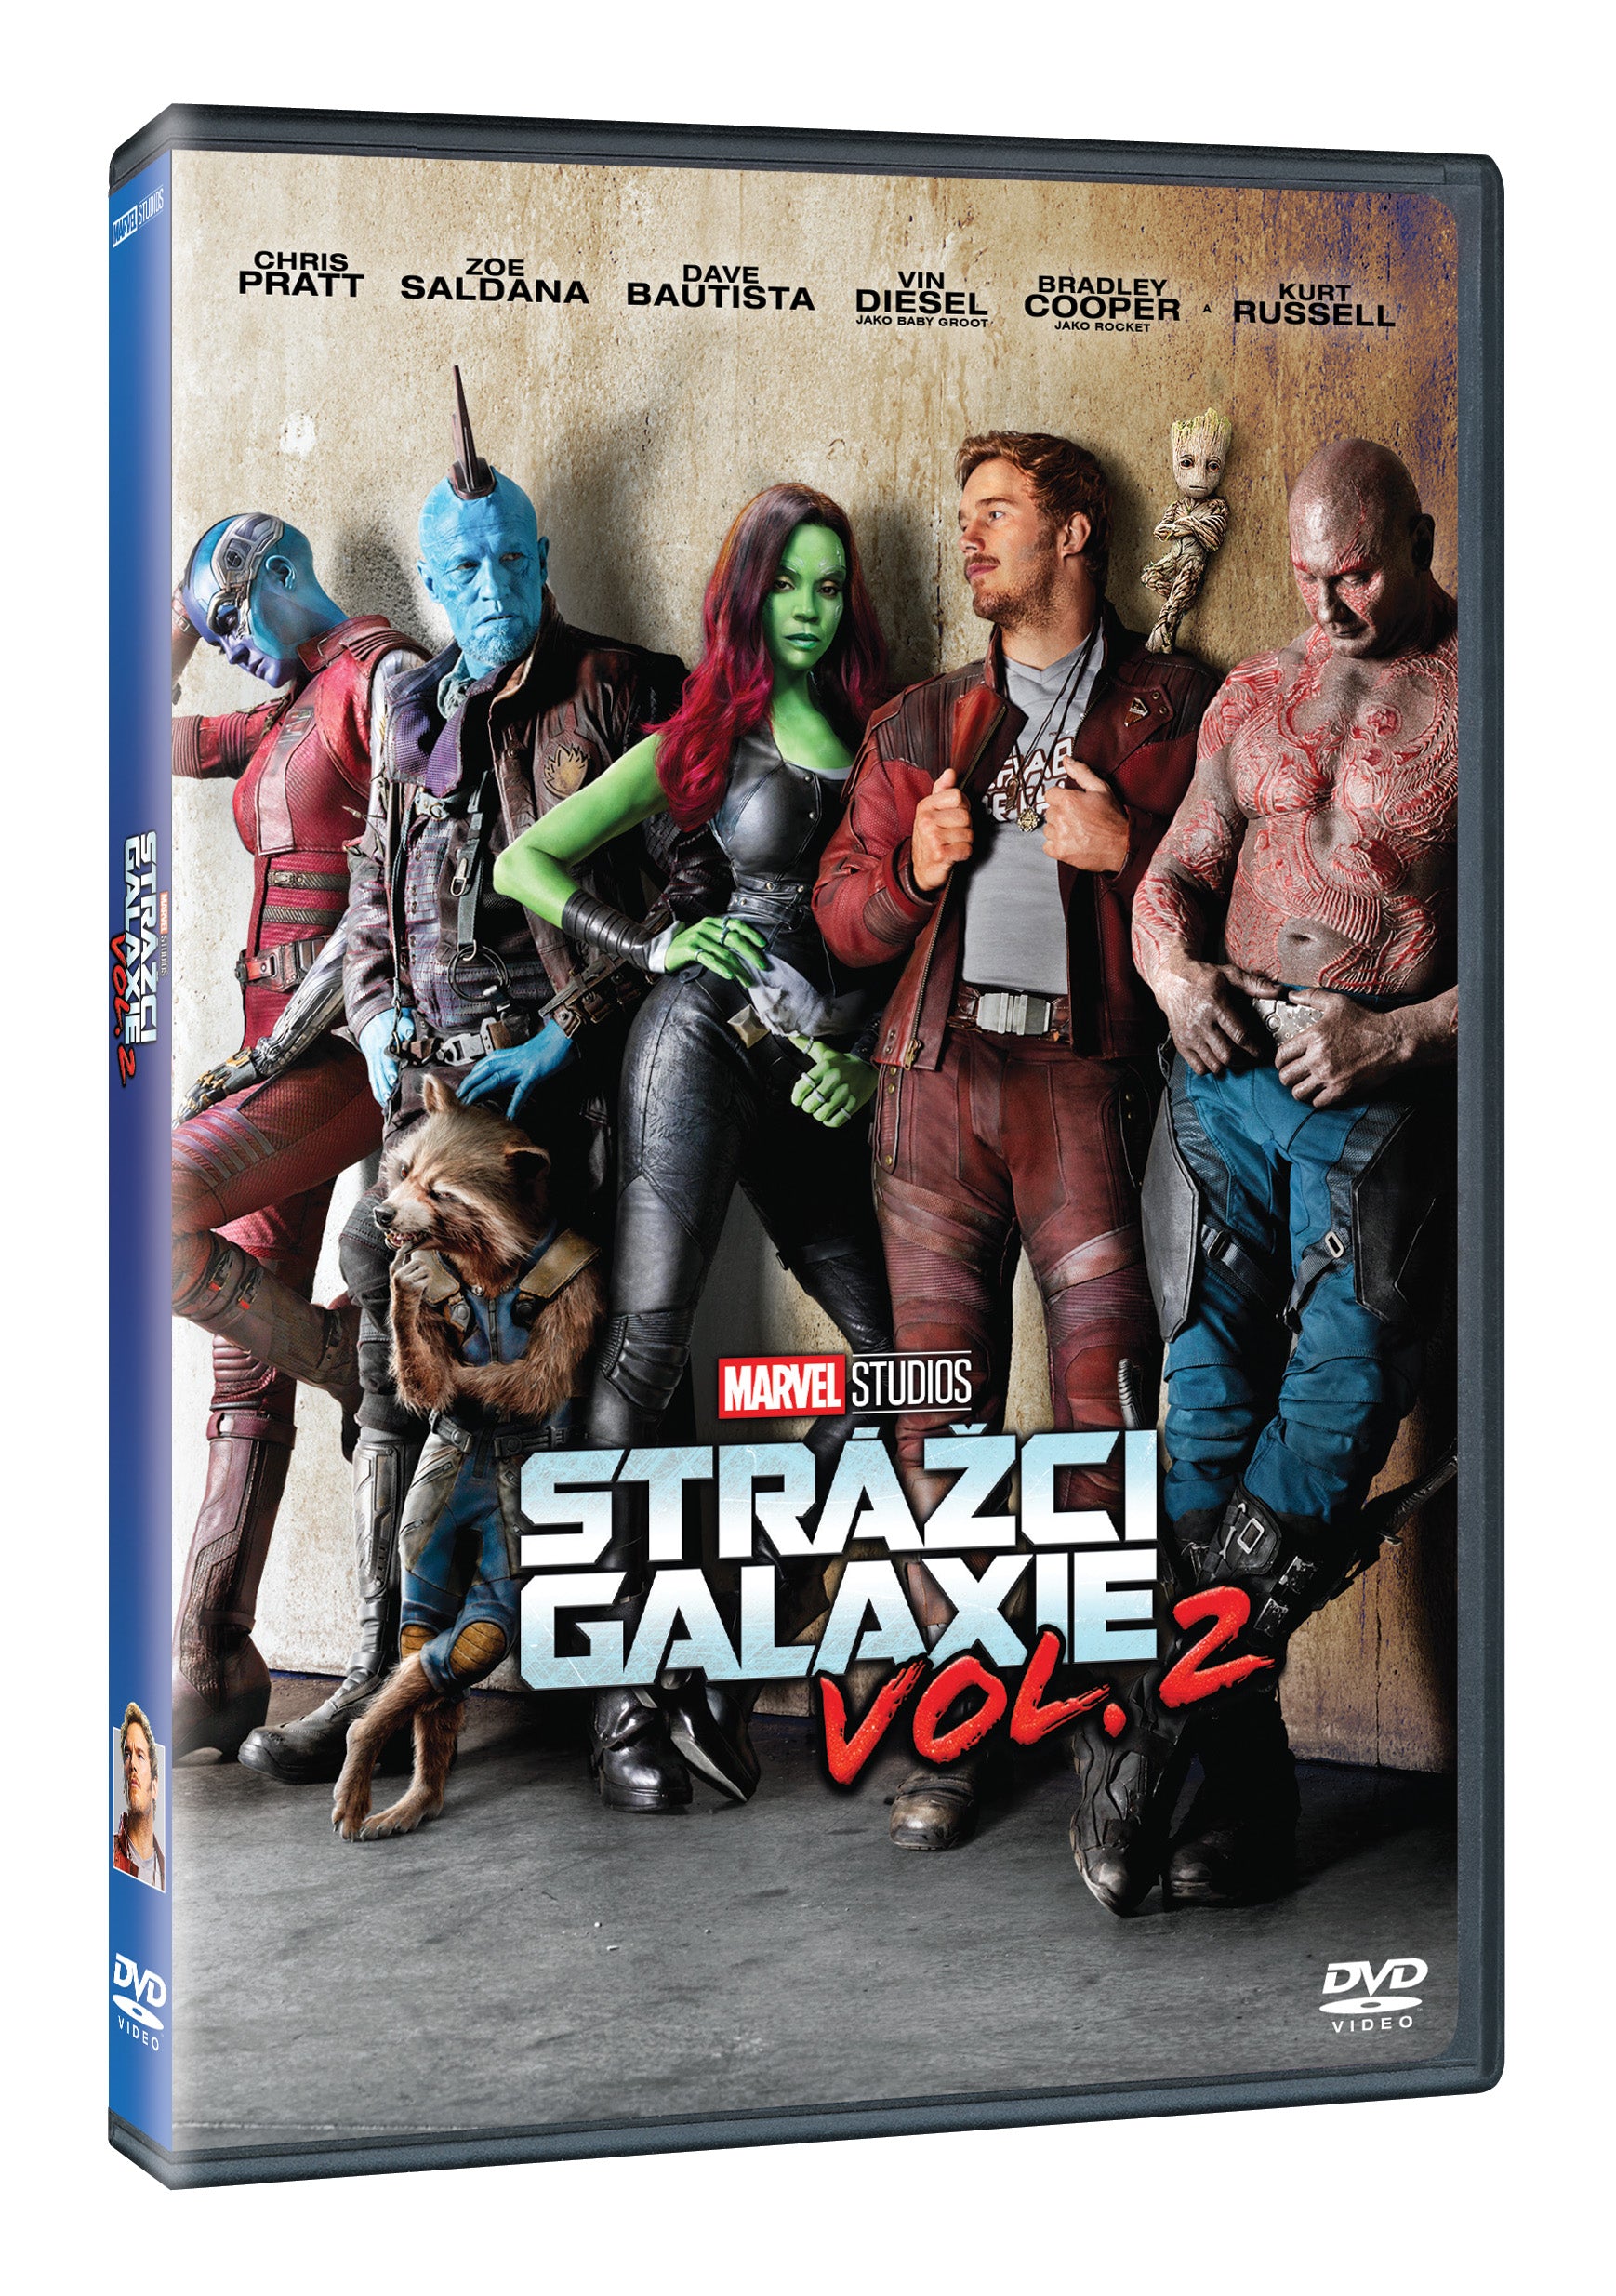 Strazci Galaxie Vol. 2 DVD / Guardians of the Galaxy Vol. 2